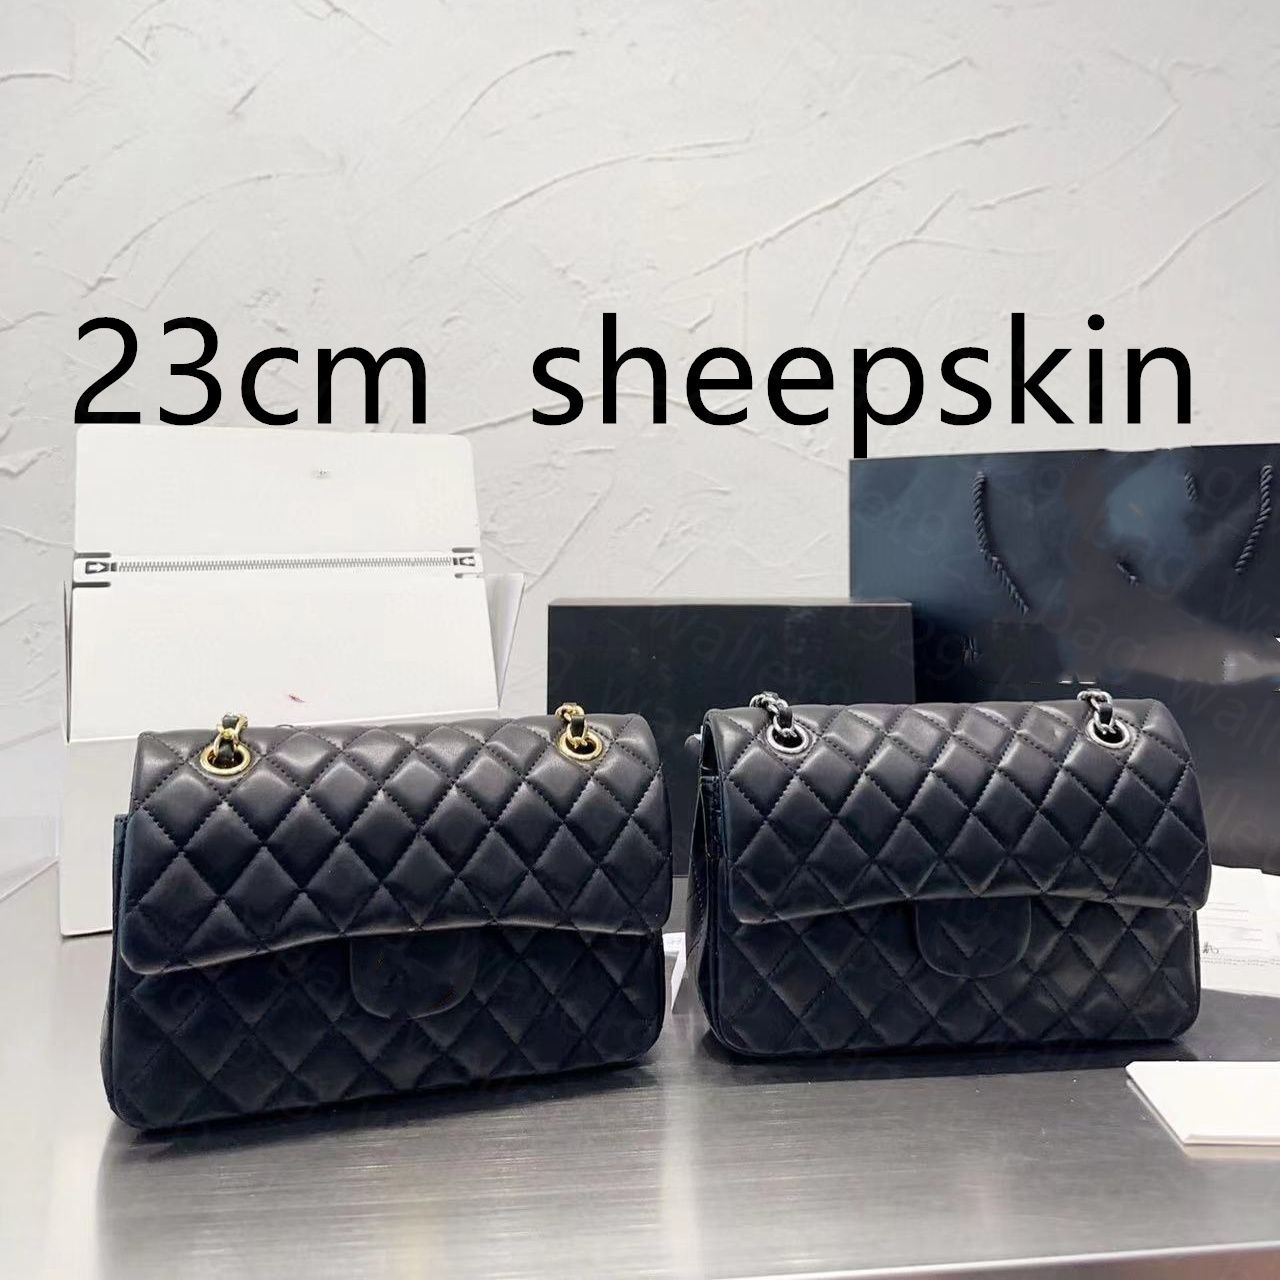 23 cm sheepskin